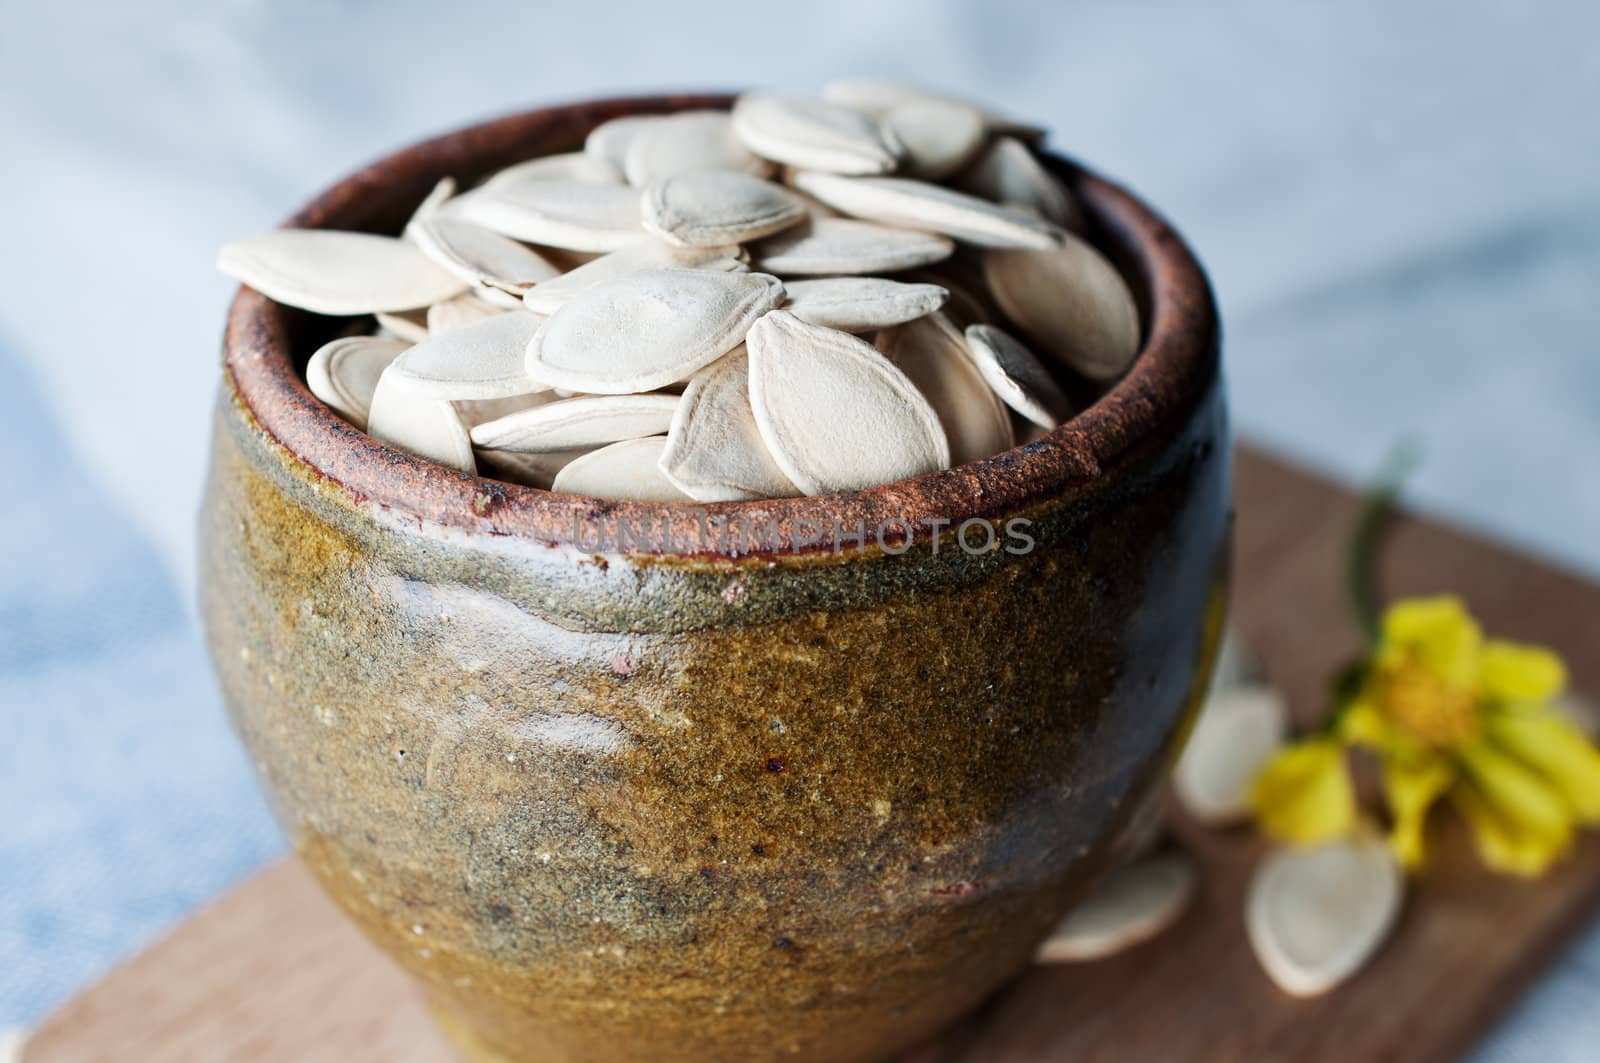 Ceramic bowl full of pumpkin seeds on kitchen table  by Nanisimova